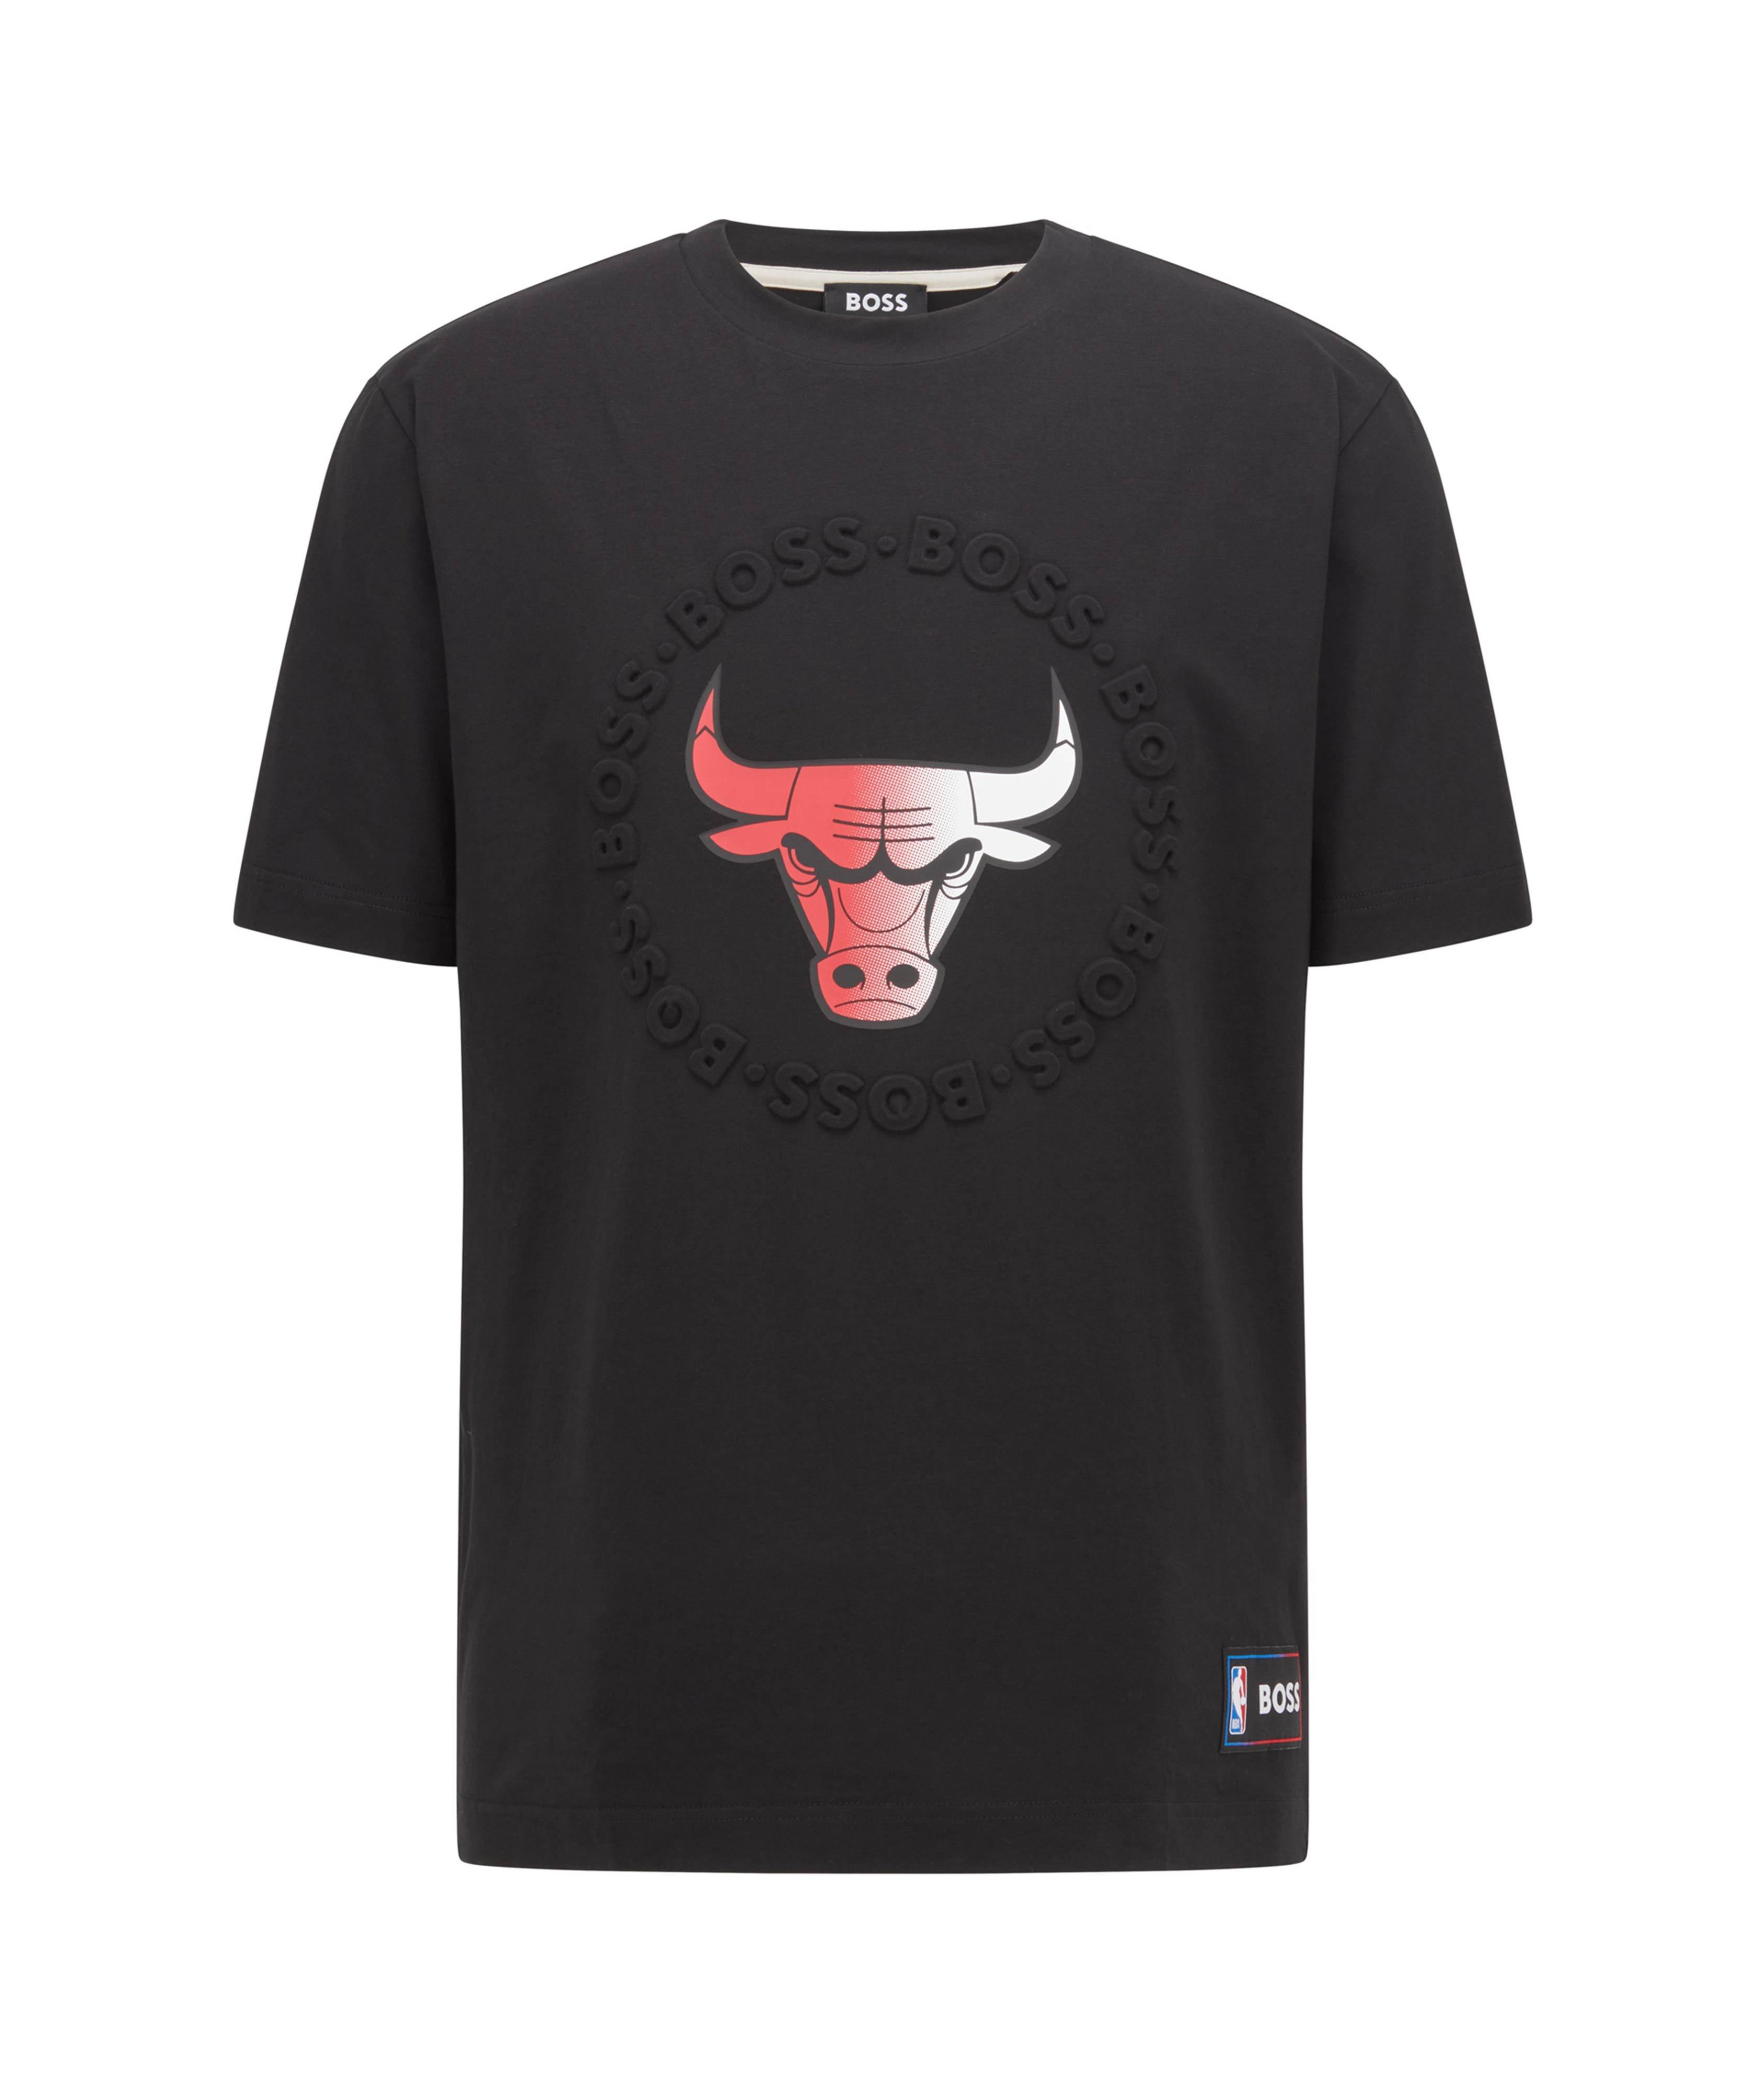 T-shirt, collection NBA image 0